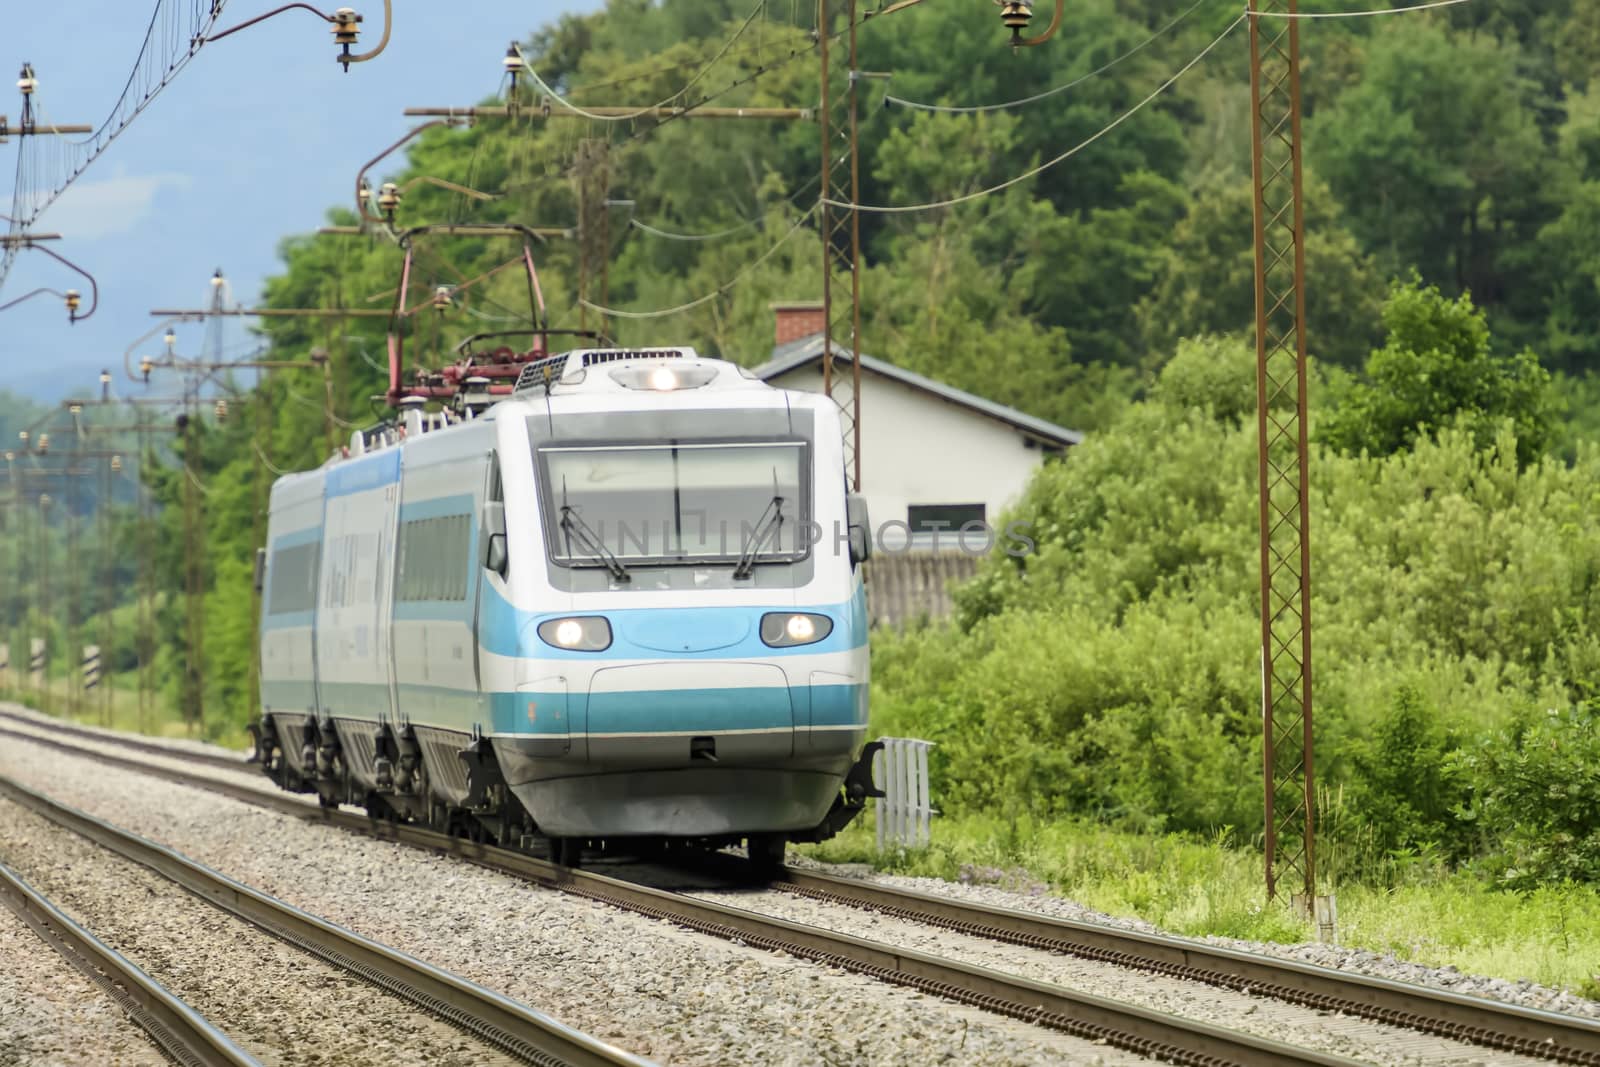 High speed passenger train approaching head on in wooden landscape